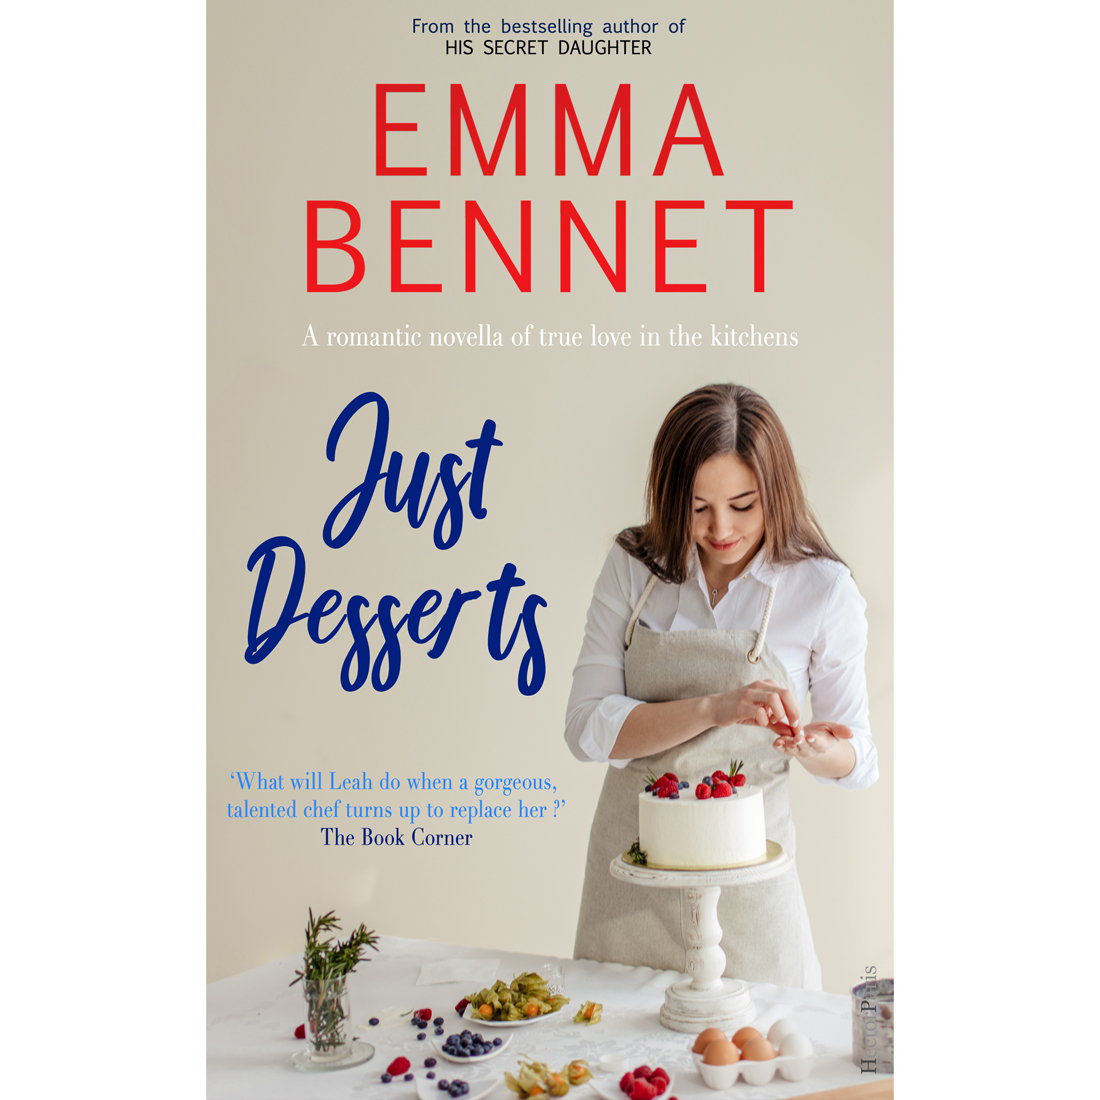 Just Desserts by Emma Bennet